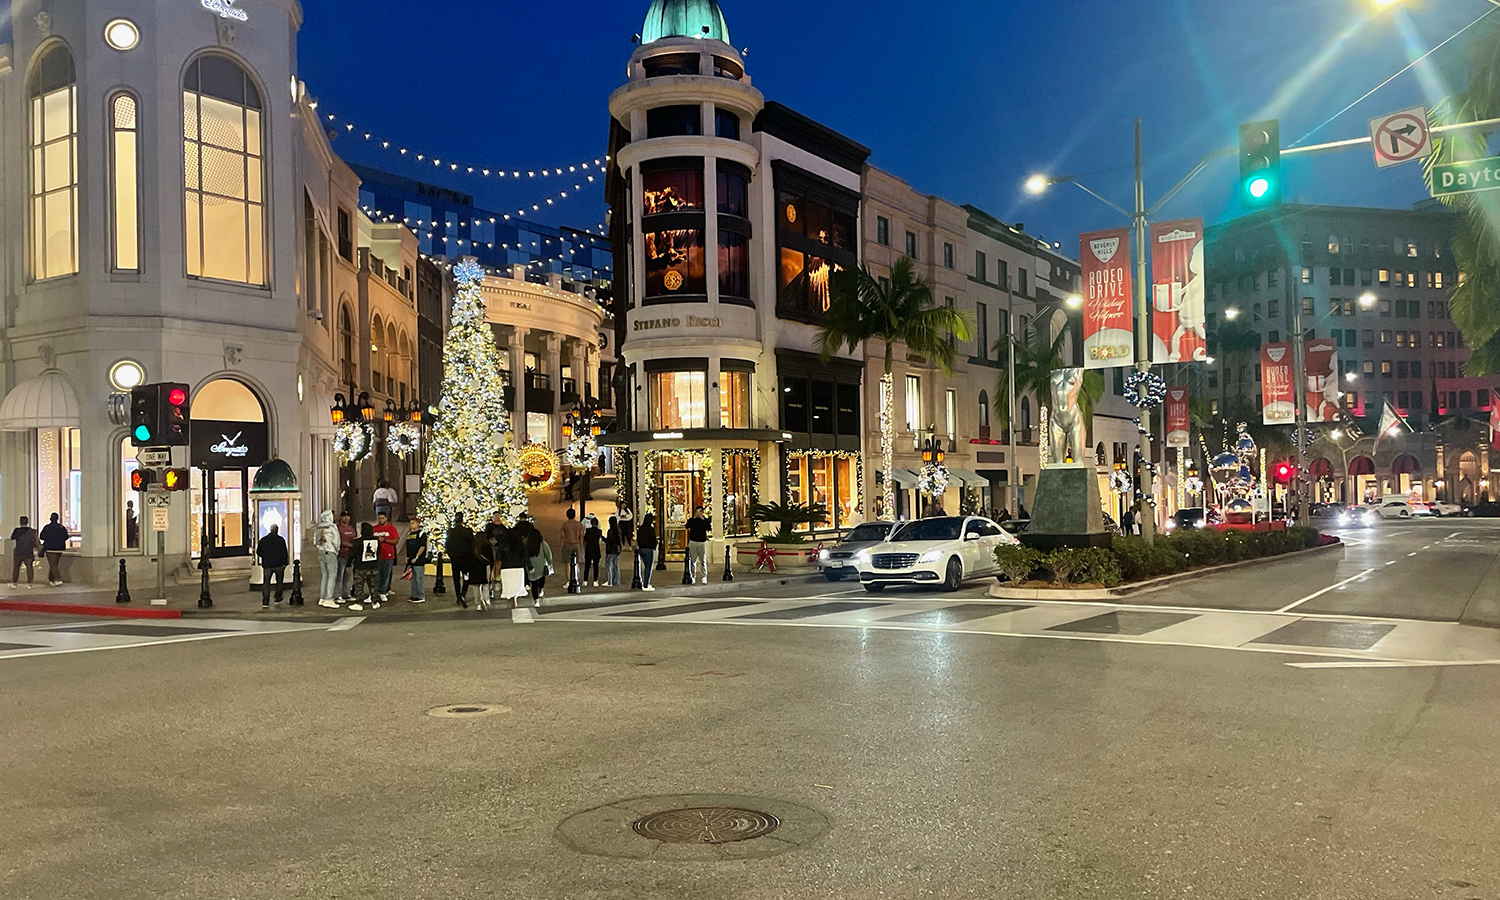 Lighting Celebration Kicks off Holiday Season in Beverly Hills